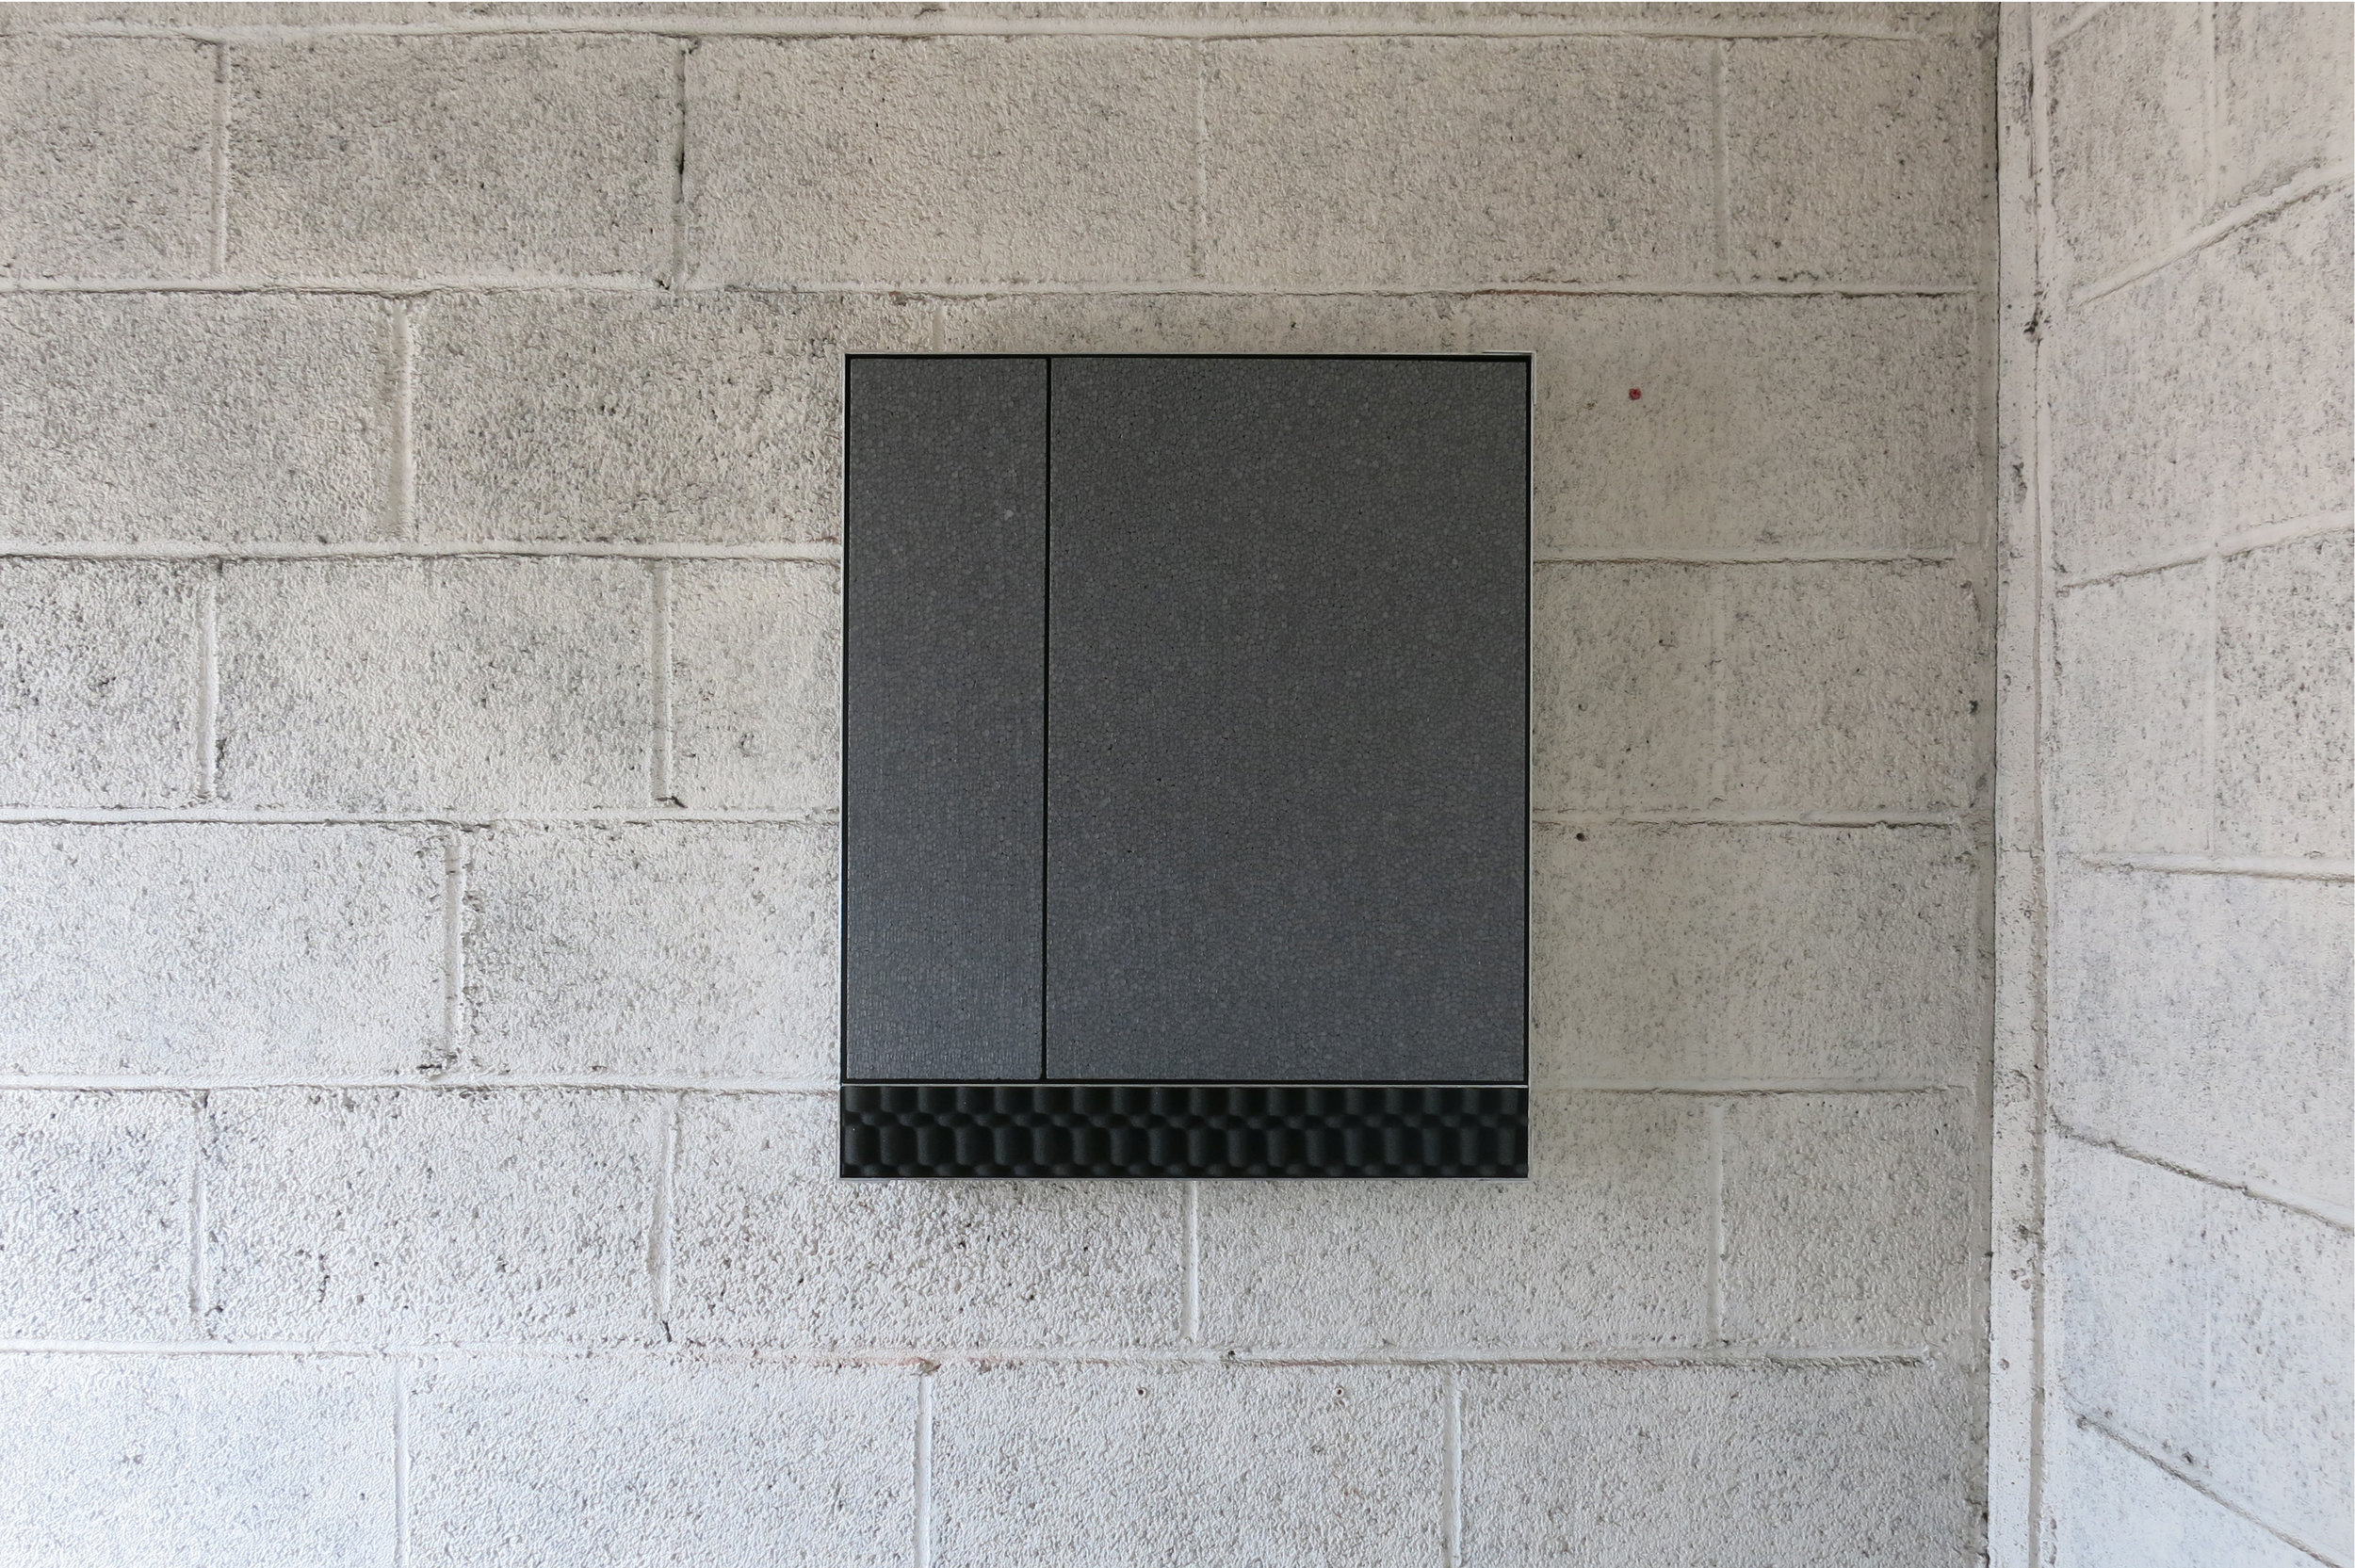  Rashid Uri,  untitled #86 , 2019, Eps, aluminium, soundproof foam, 61x51 cm 